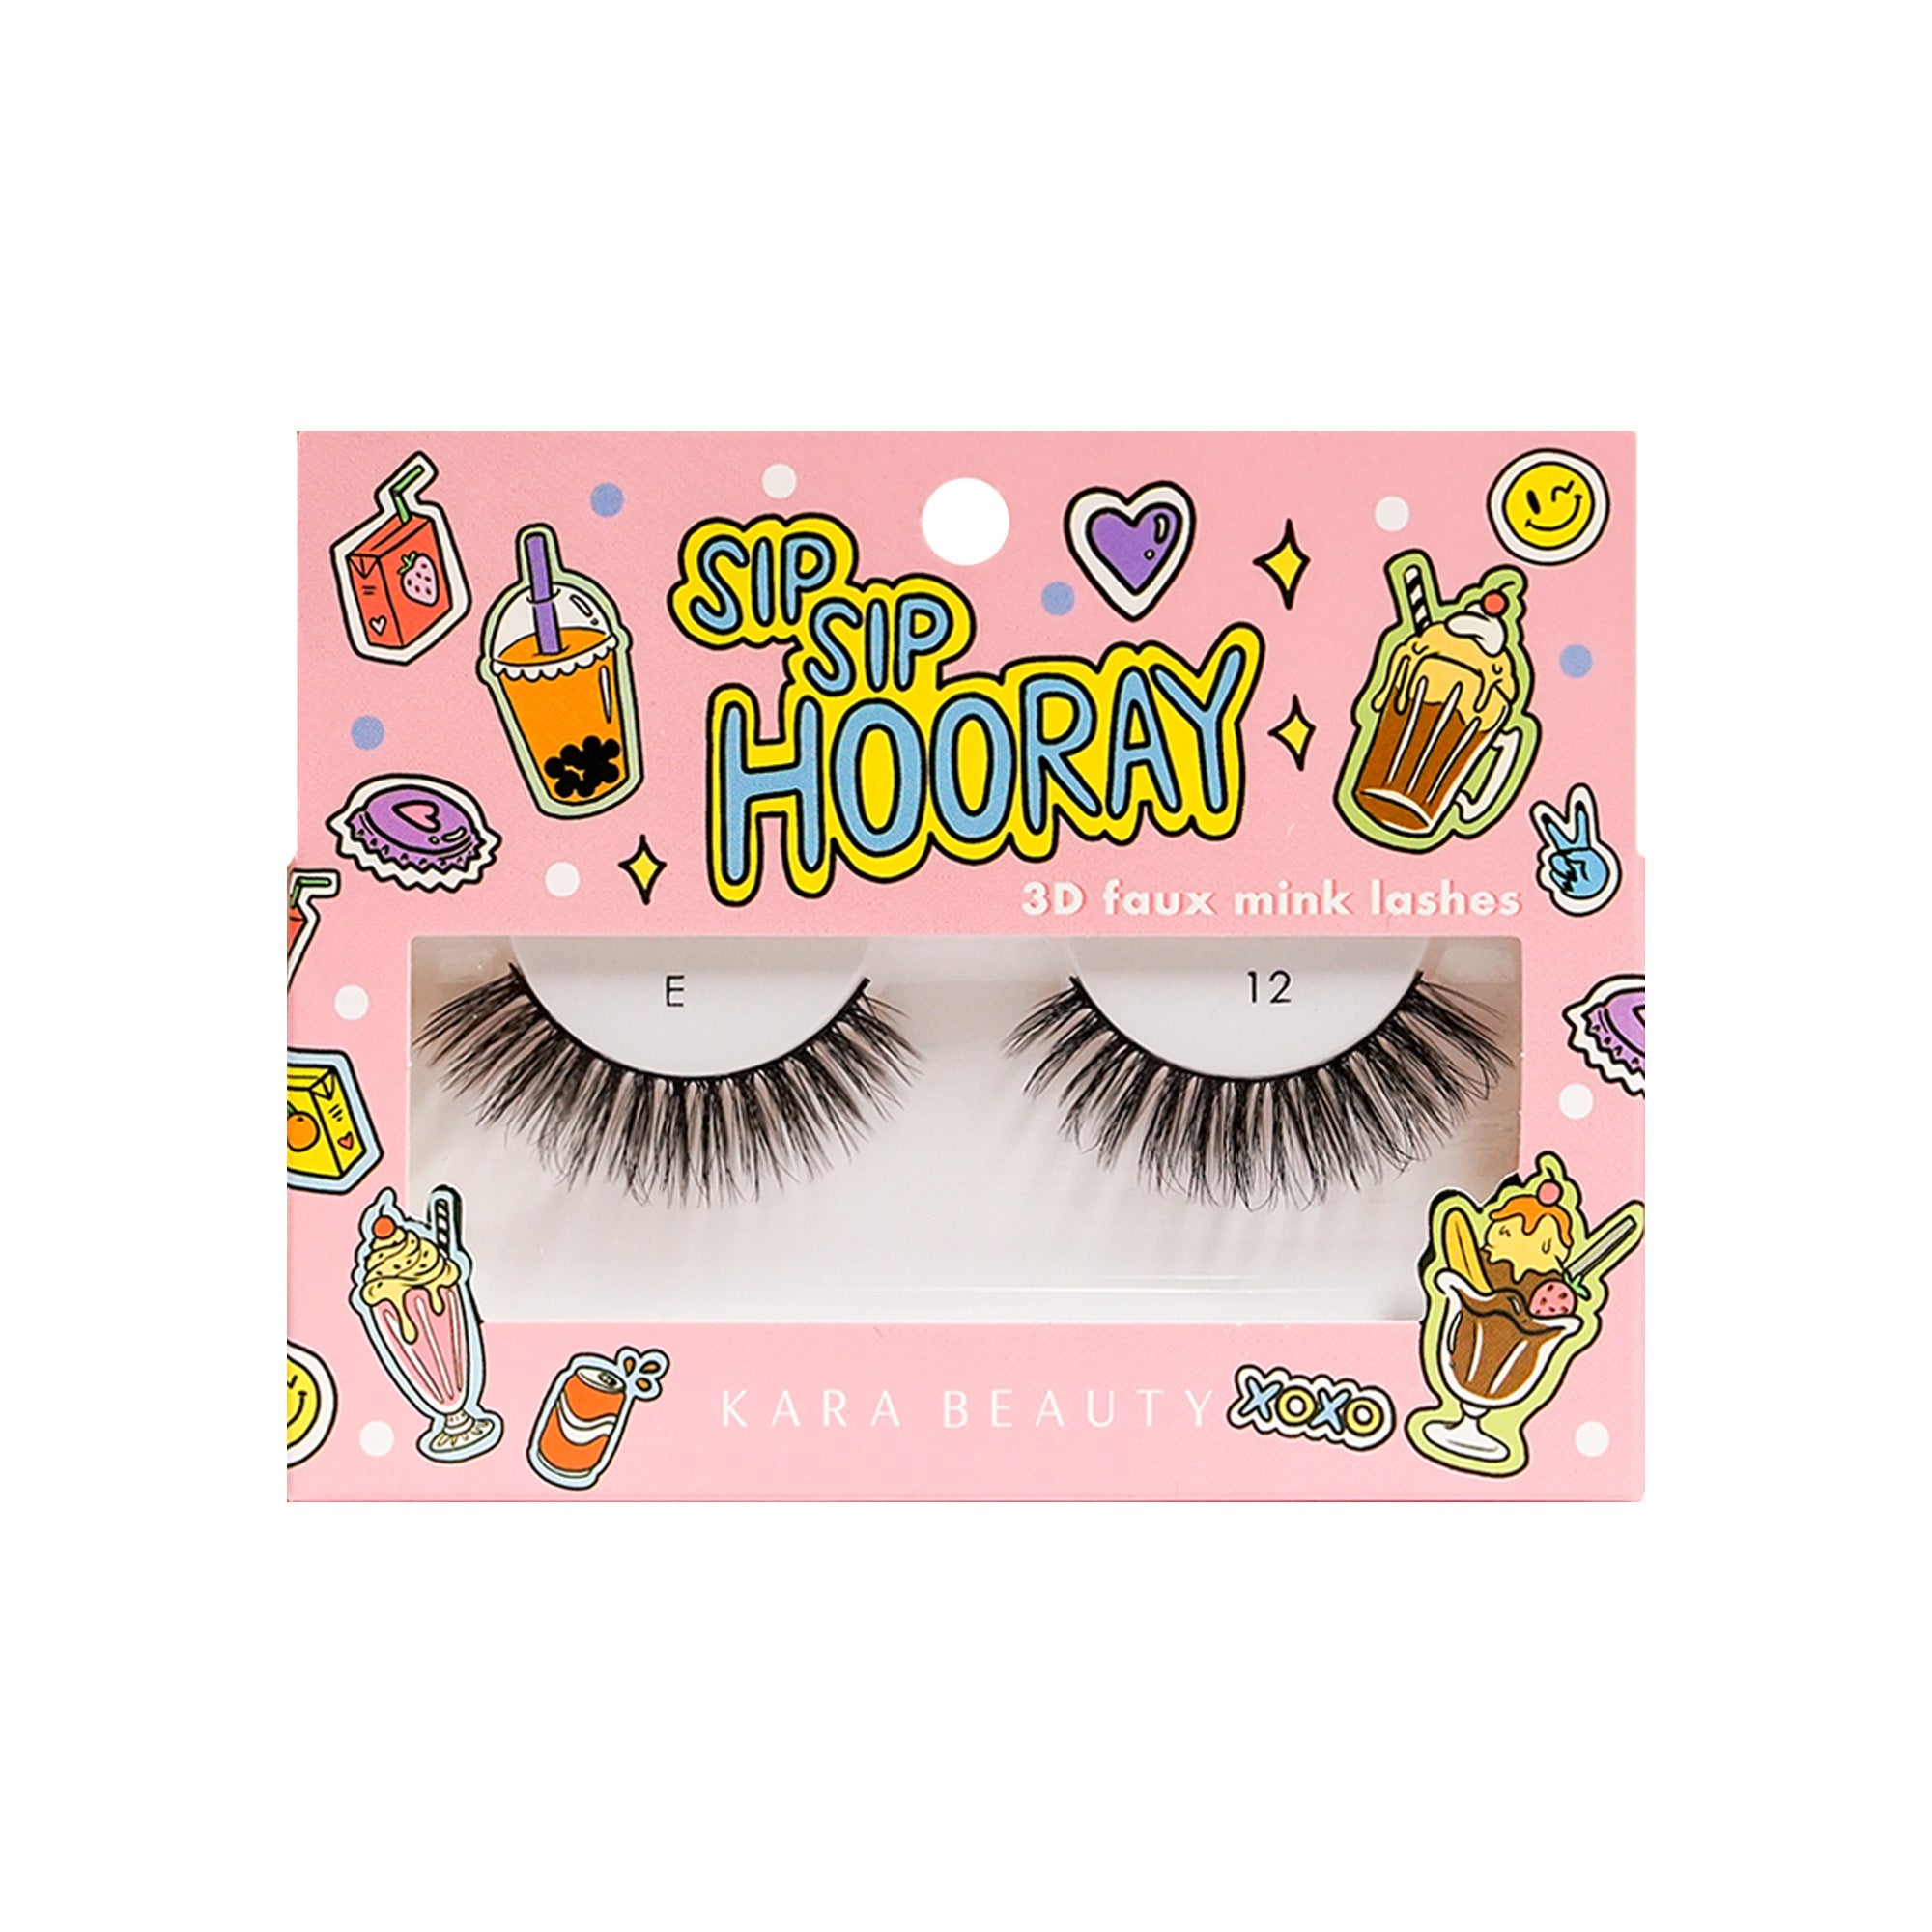 Kara Beauty's Sip Sip Hooray 3D Faux Mink - Synthetic Strip Eyelashes Style E12